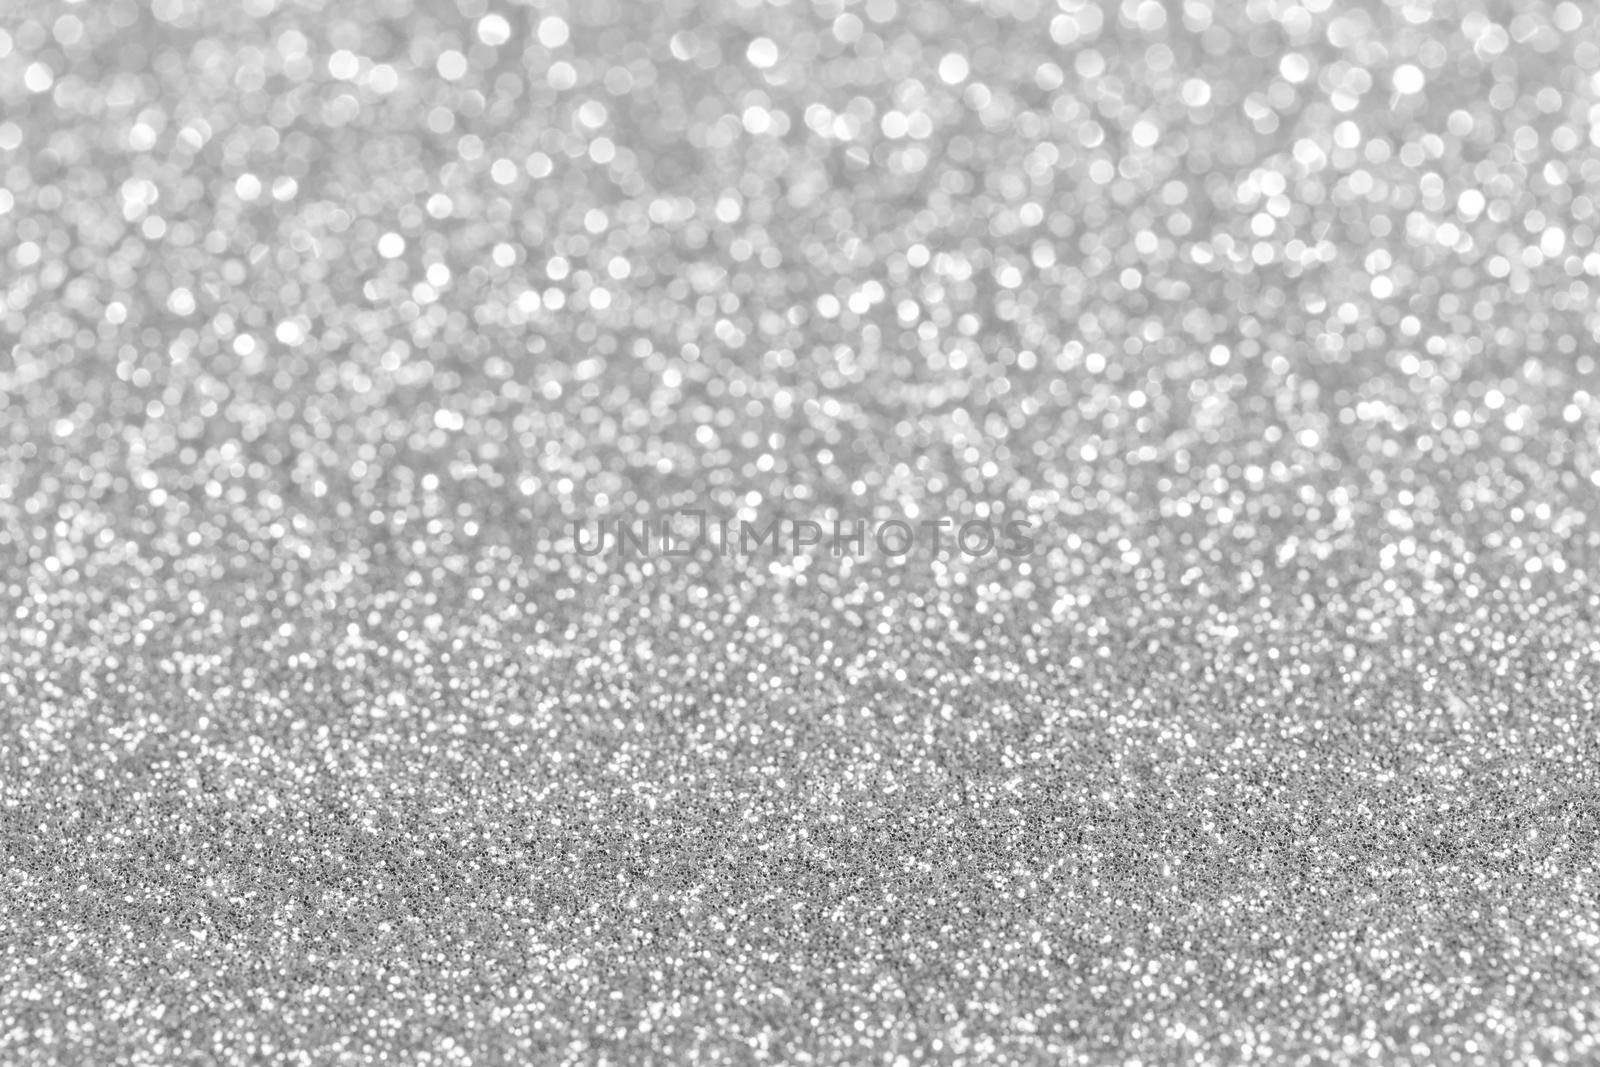 Shiny silver glitter background by Yellowj